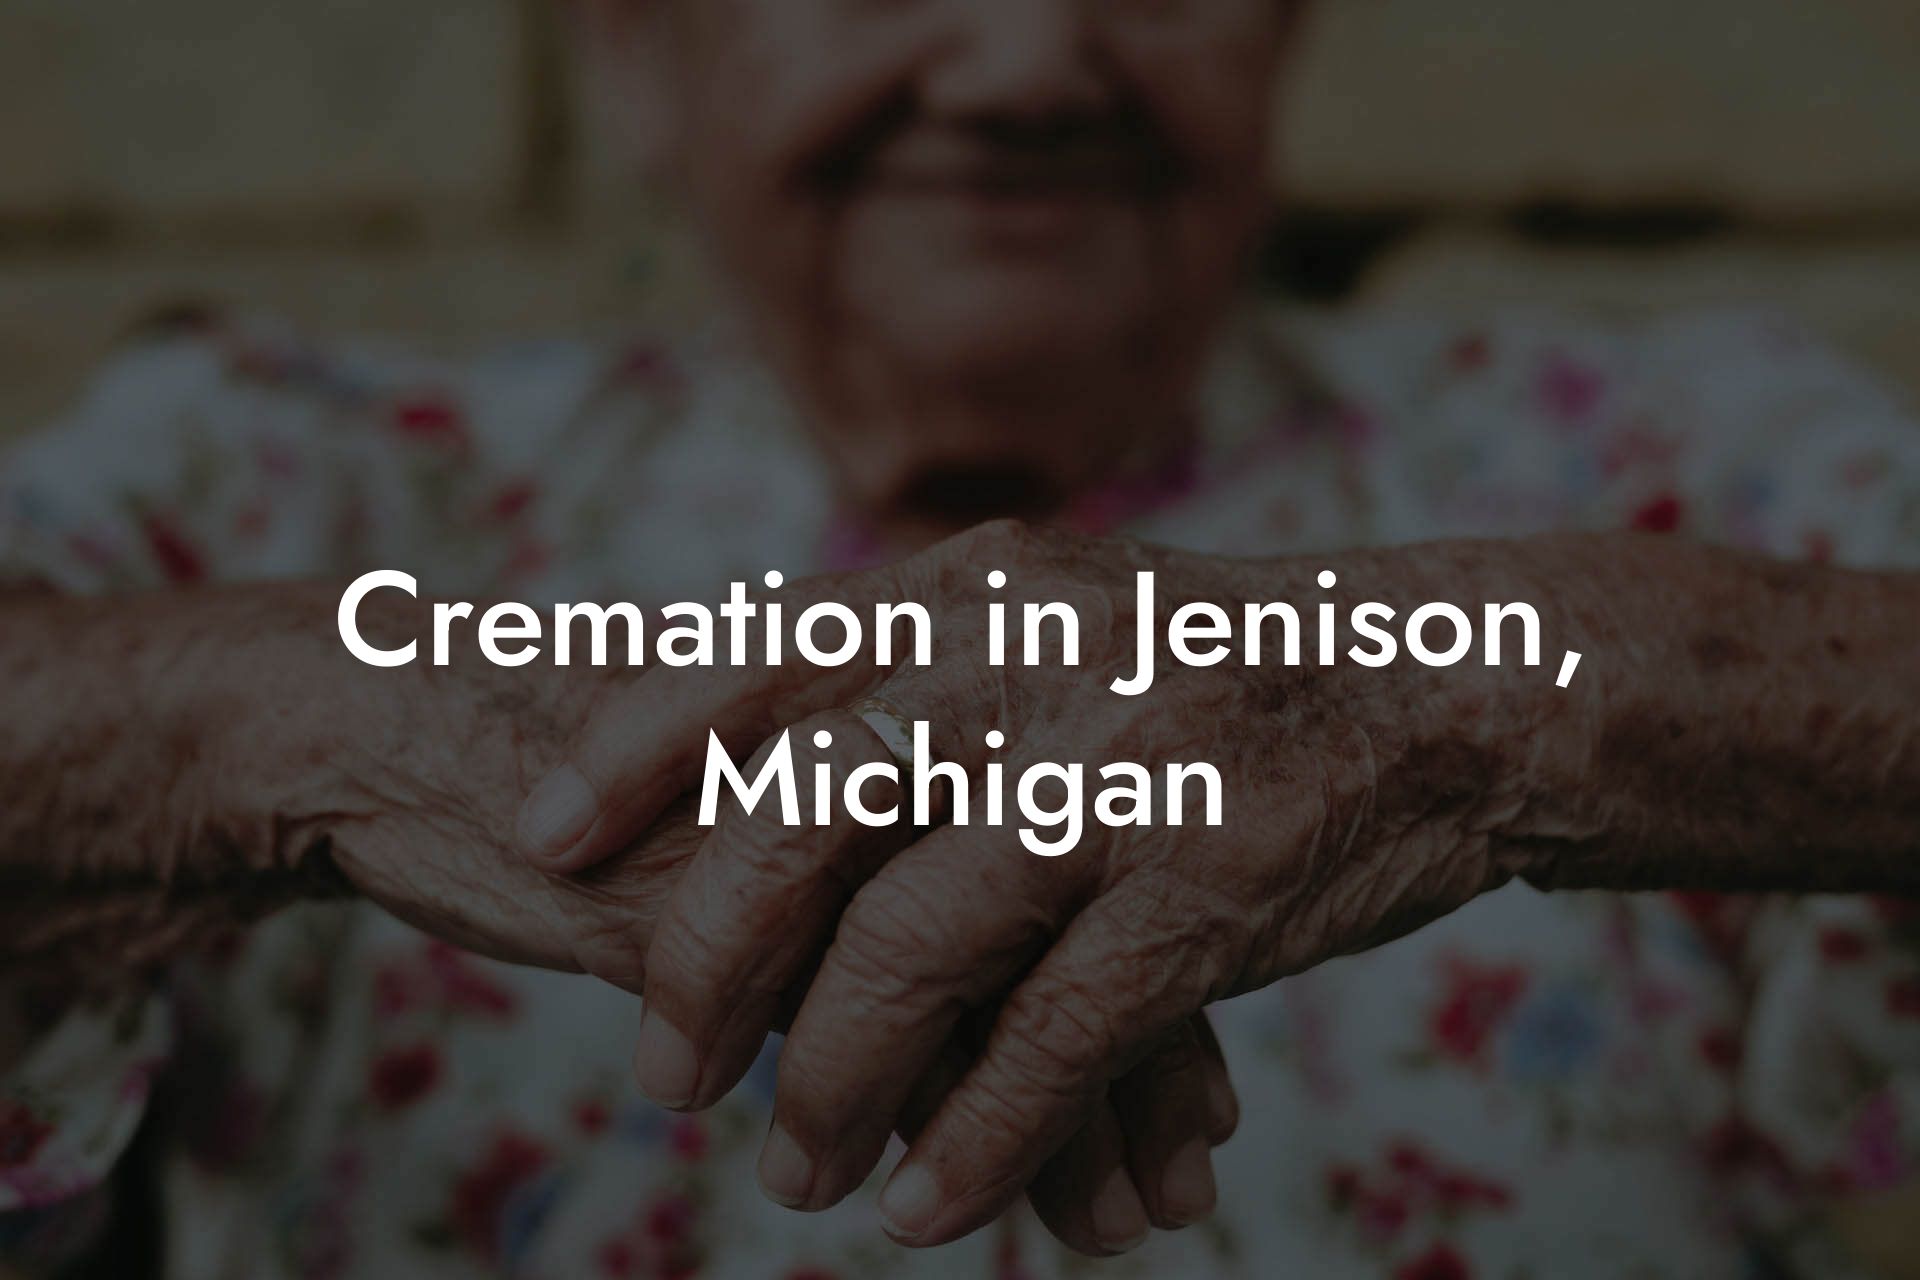 Cremation in Jenison, Michigan